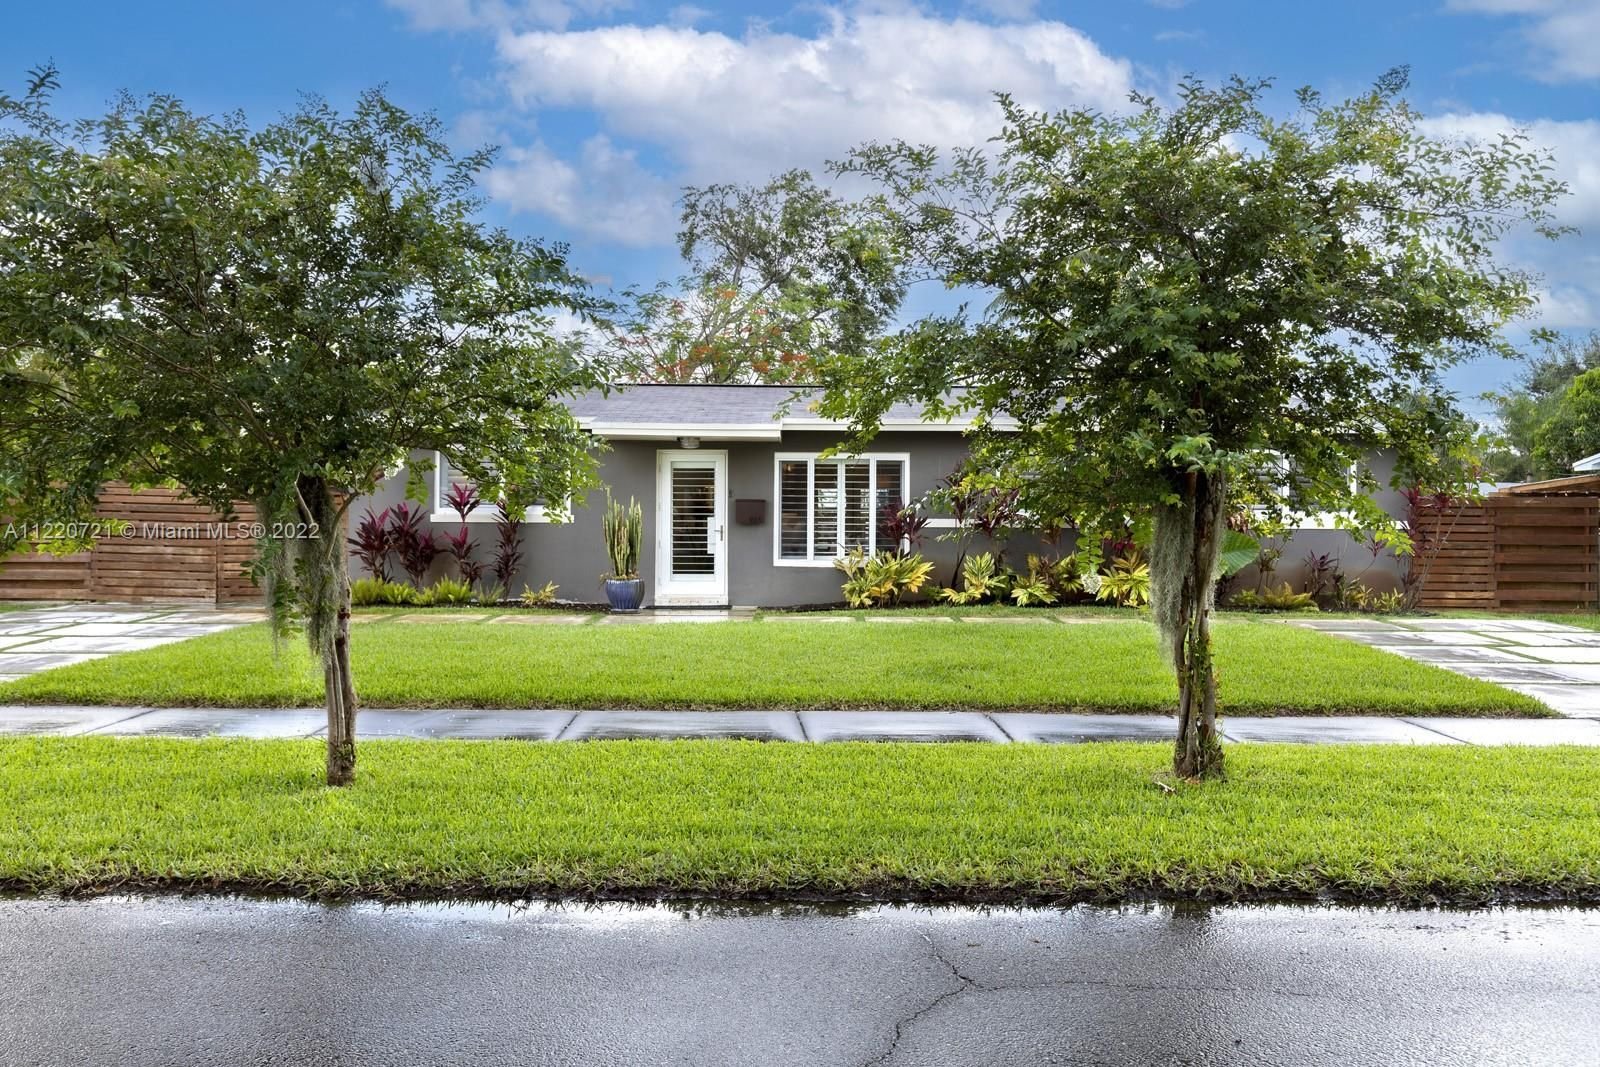 Real estate property located at 9851 85th Ter, Miami-Dade County, Miami, FL